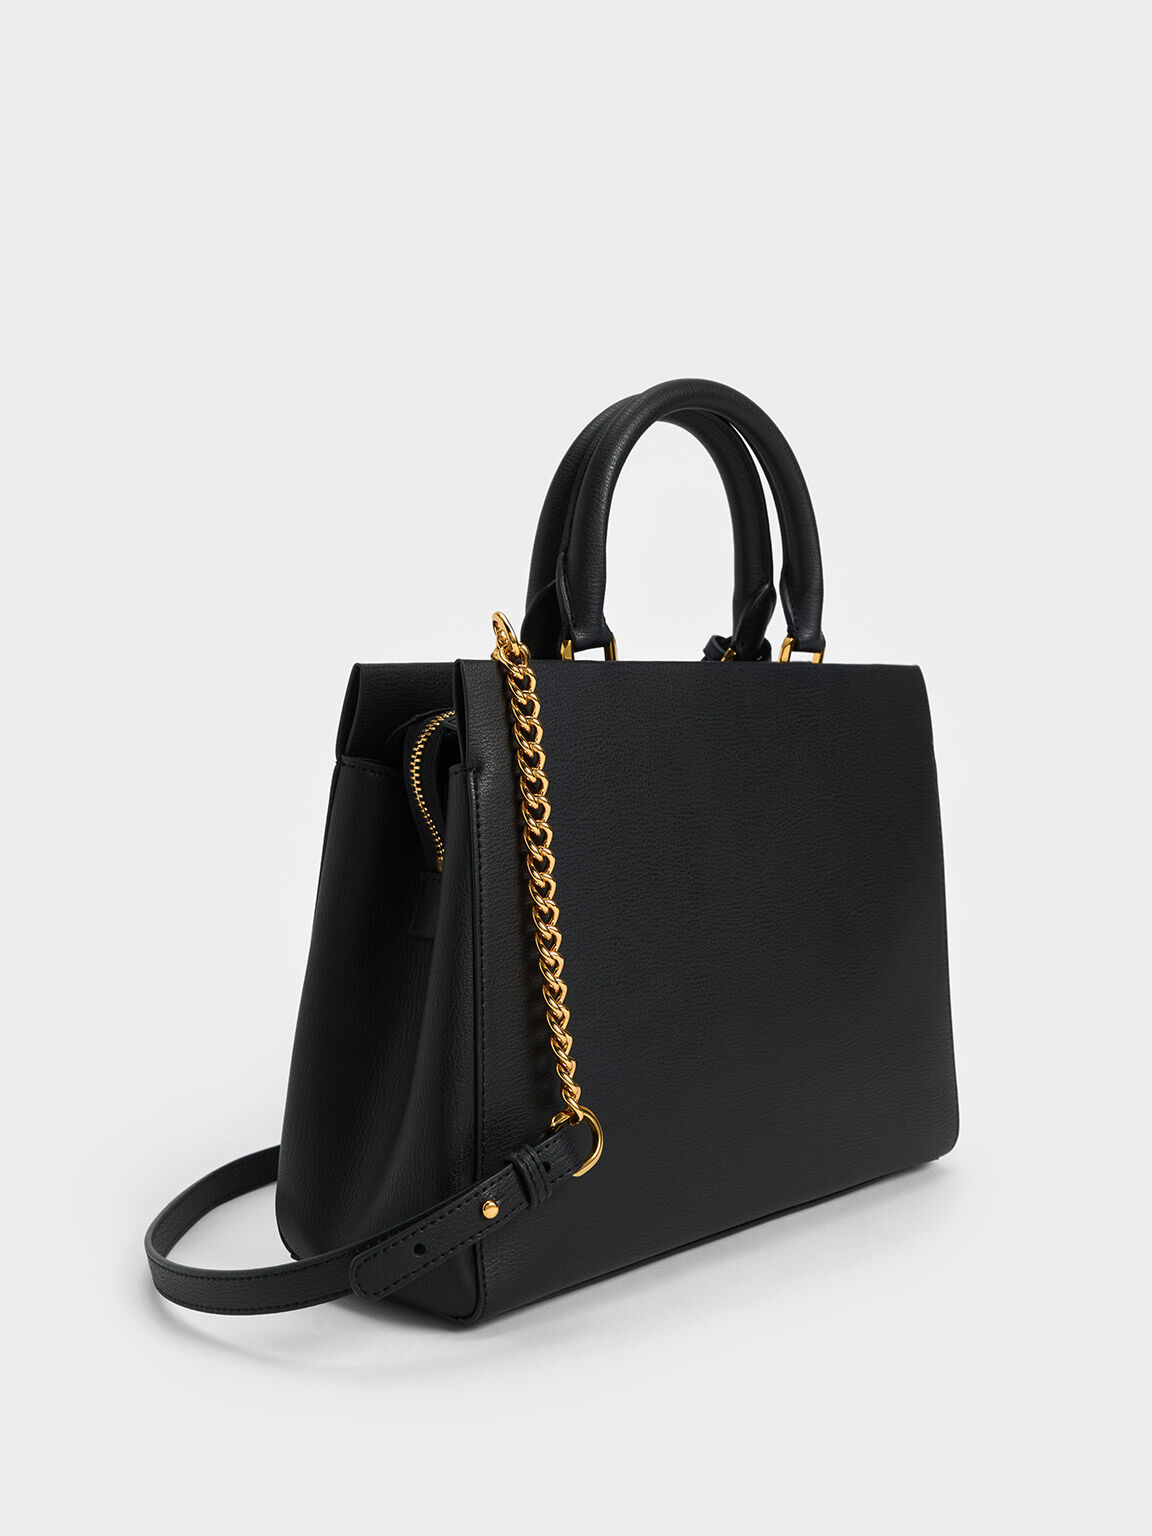  Black Structured Handbag